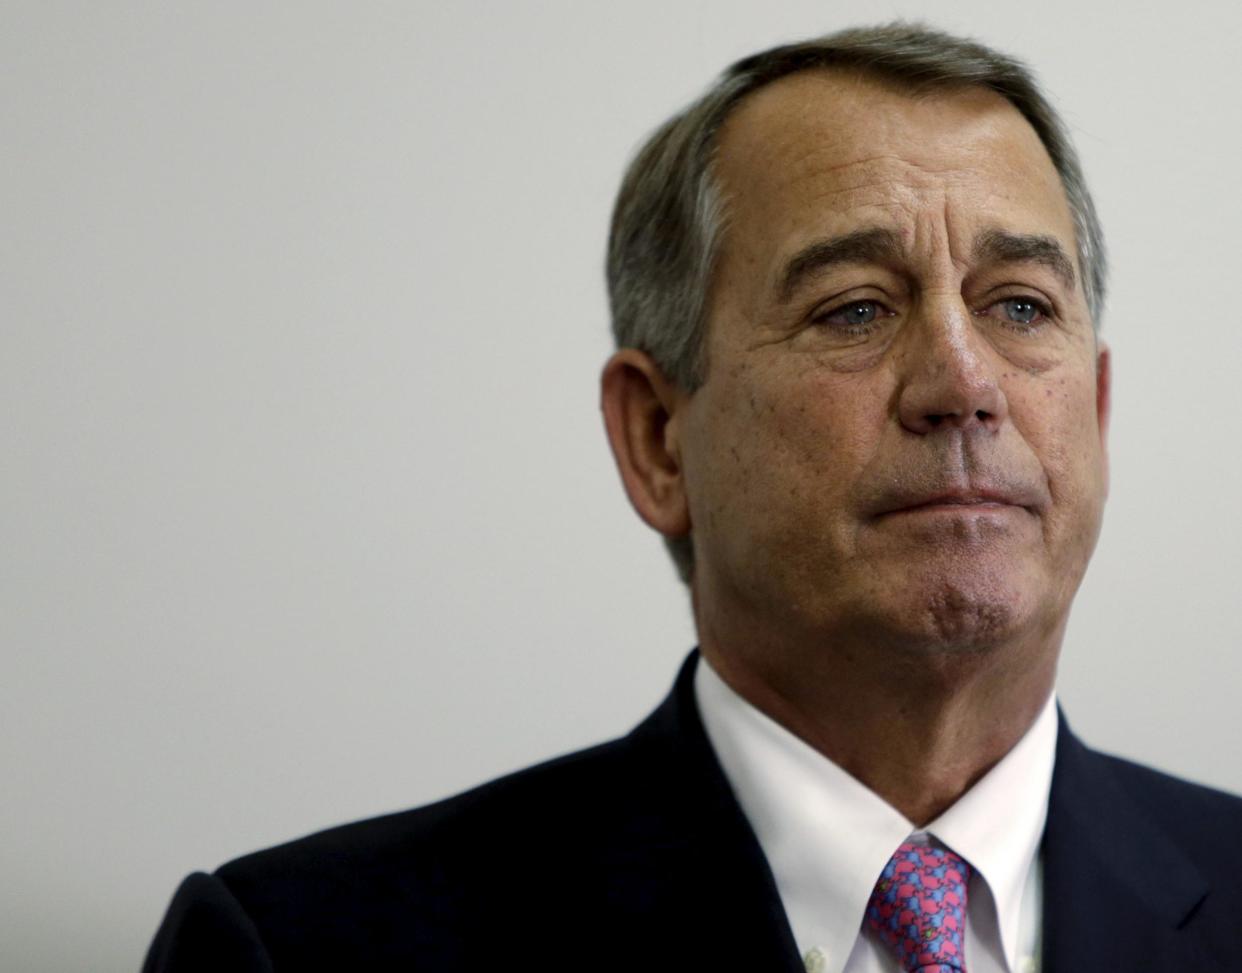 Former Speaker of the House John Boehner in Washington on October 27, 2015: REUTERS/Gary Cameron/File Photo